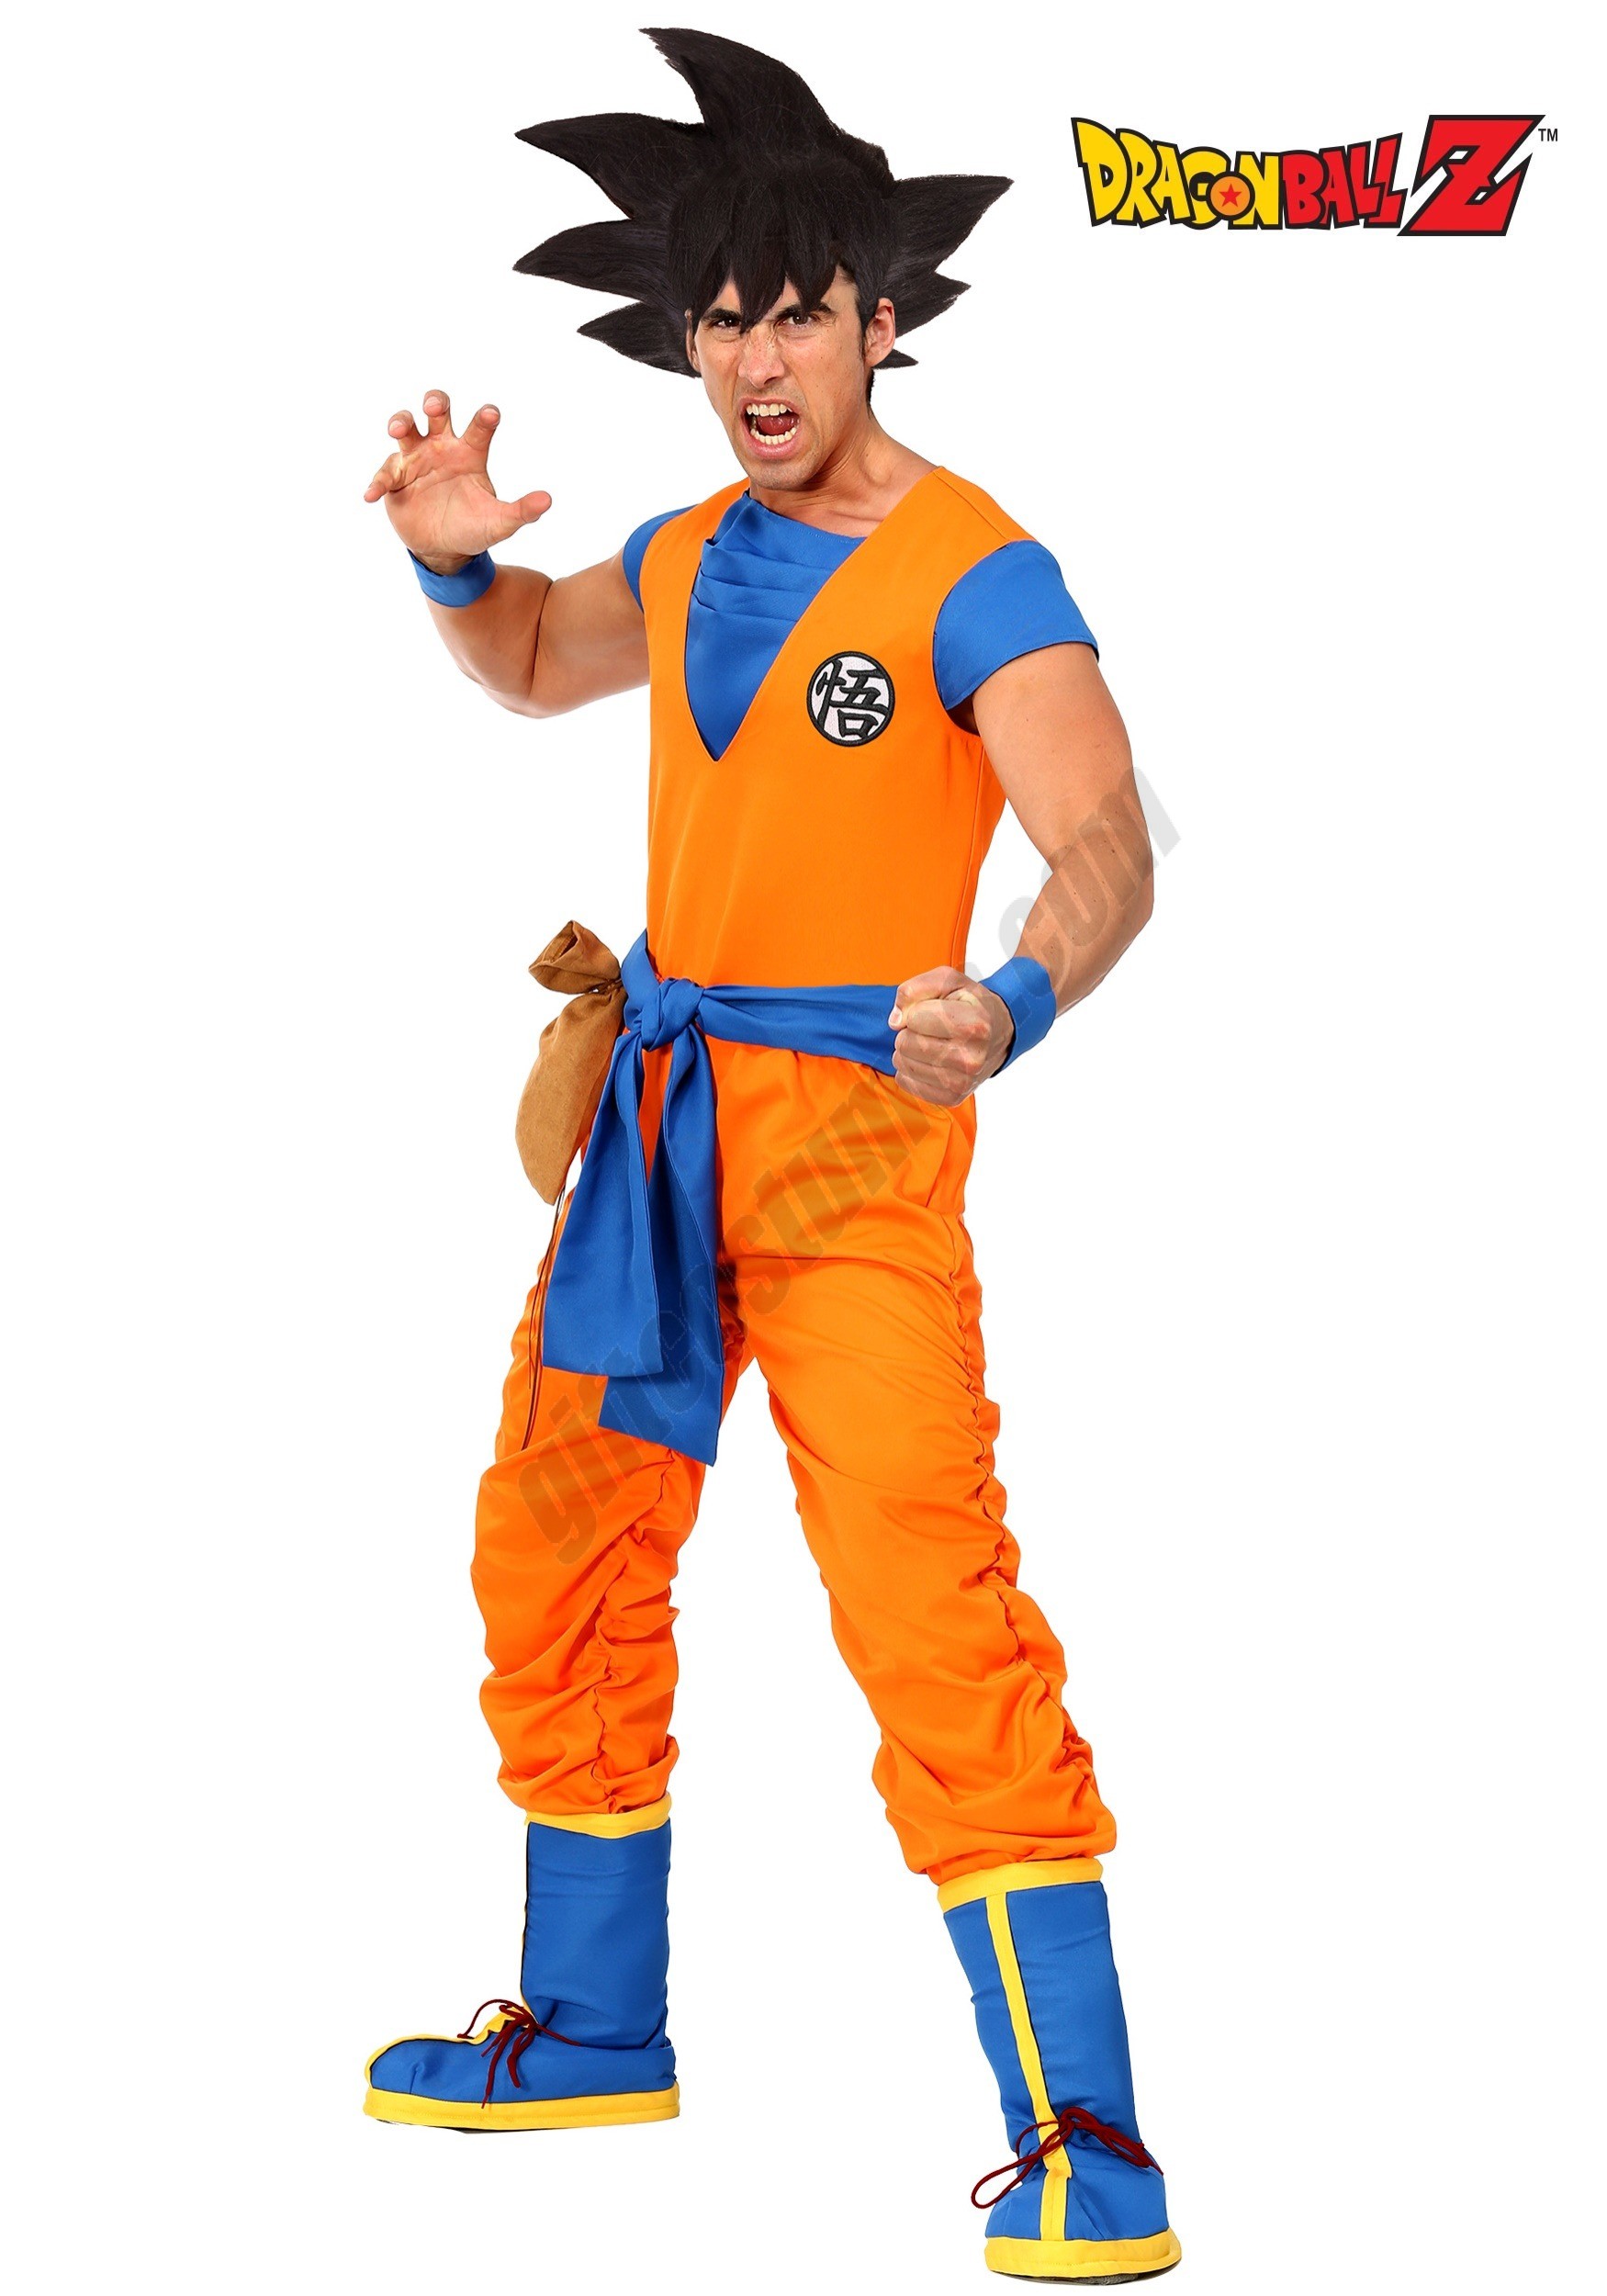 Dragon Ball Z Authentic Goku Men's Costume Promotions - Dragon Ball Z Authentic Goku Men's Costume Promotions